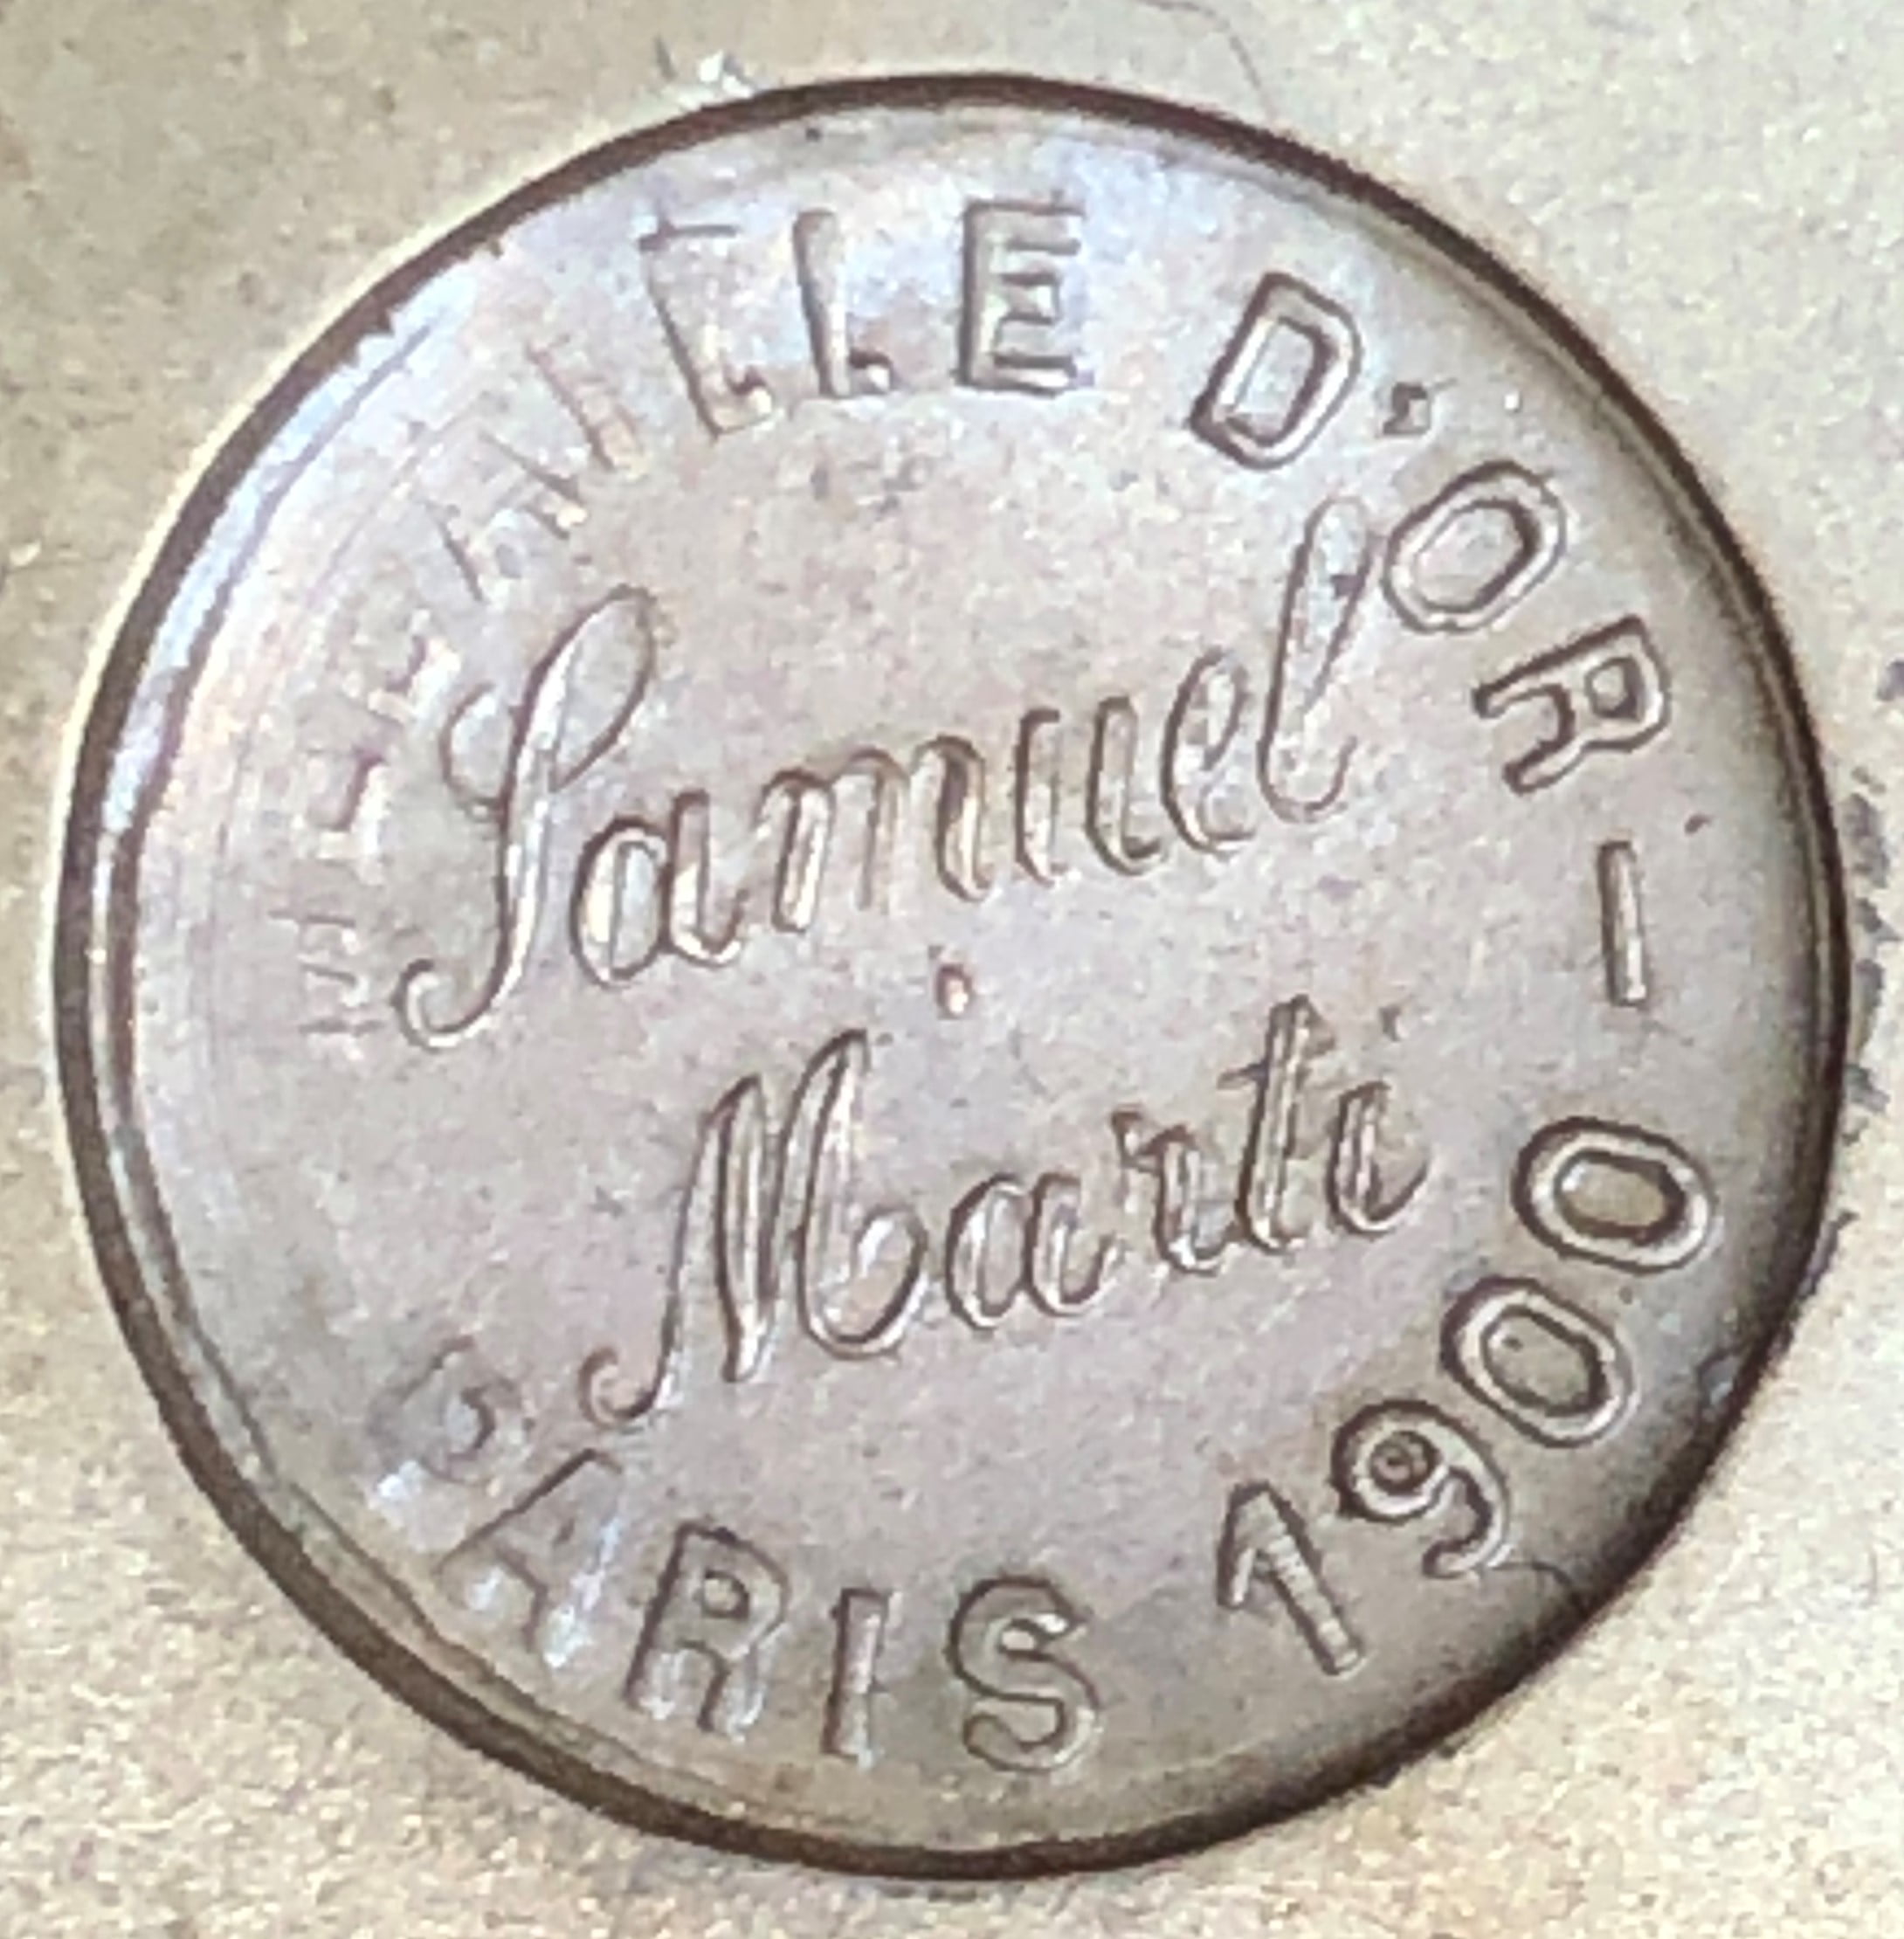 Medallion in close-up of the Samuel Marti Paris 1900 Gold Medal